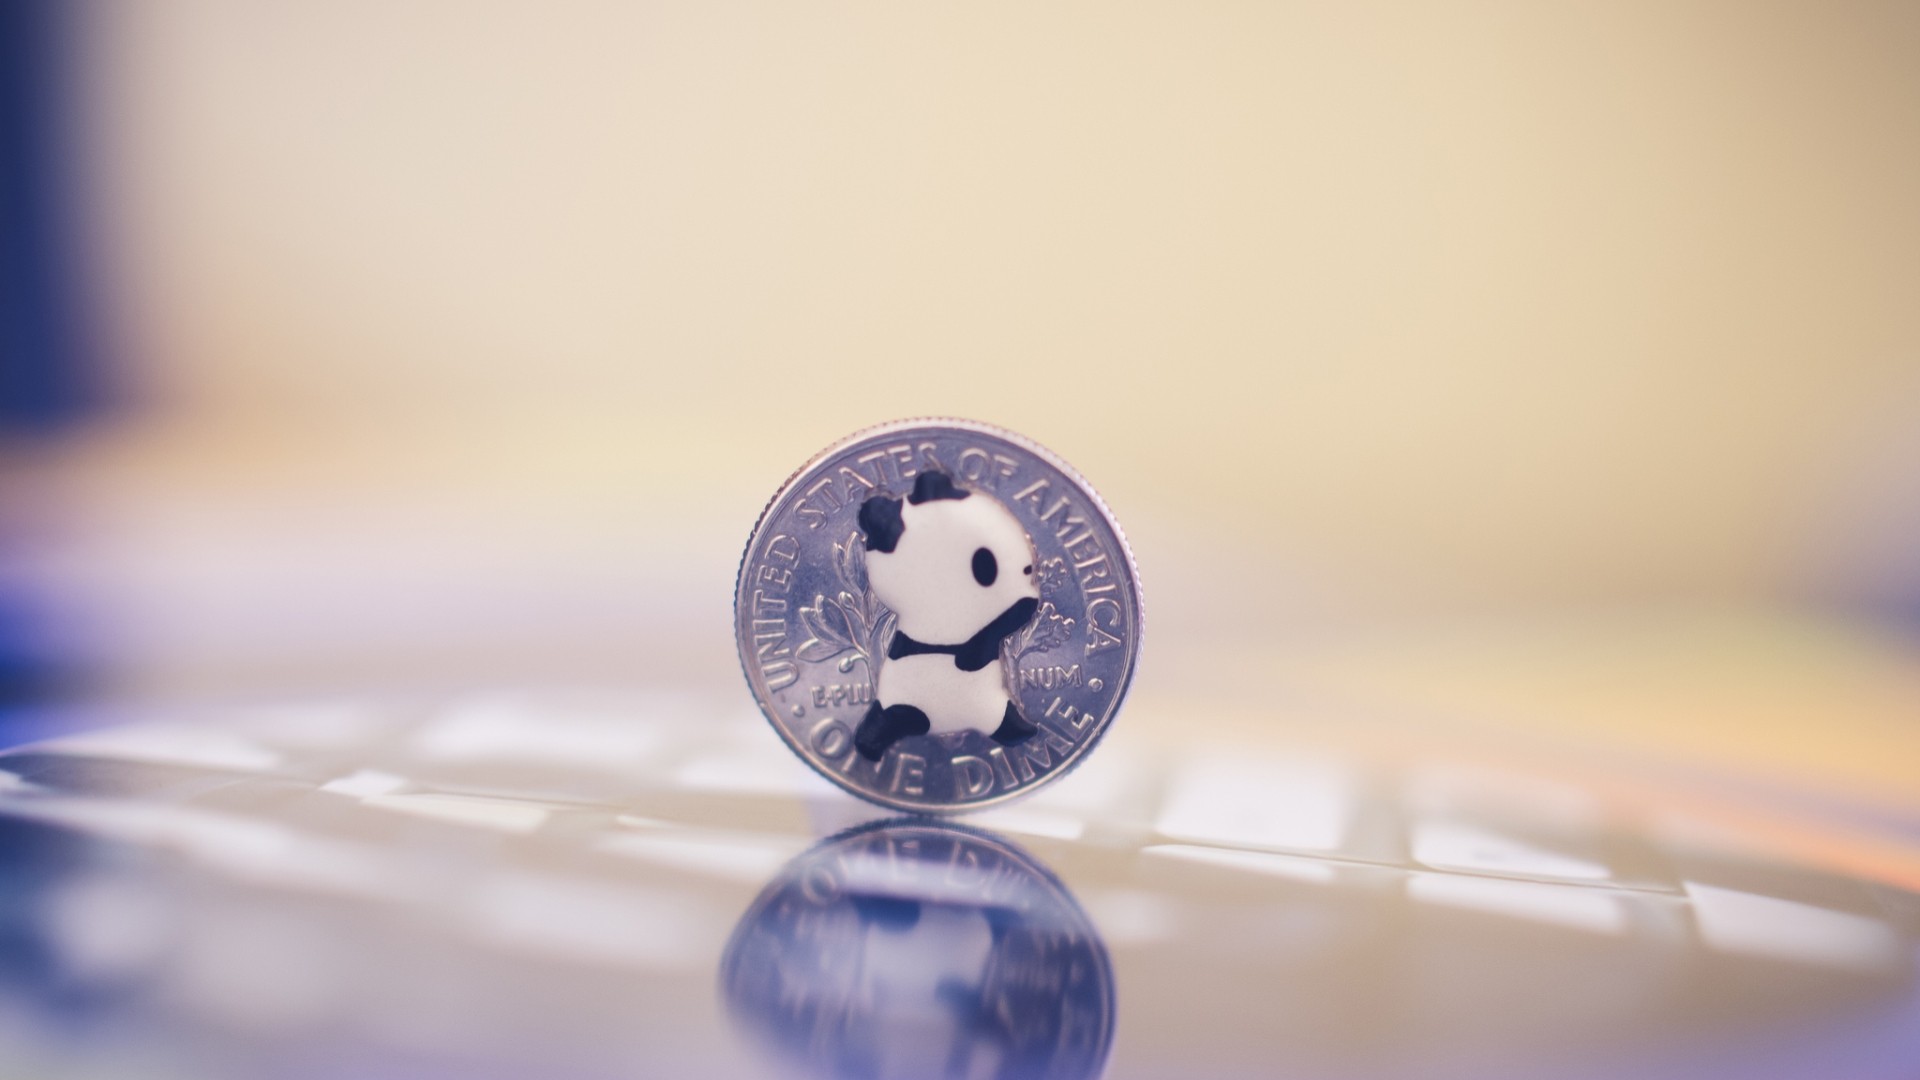 General 1920x1080 panda money coins metal reflection